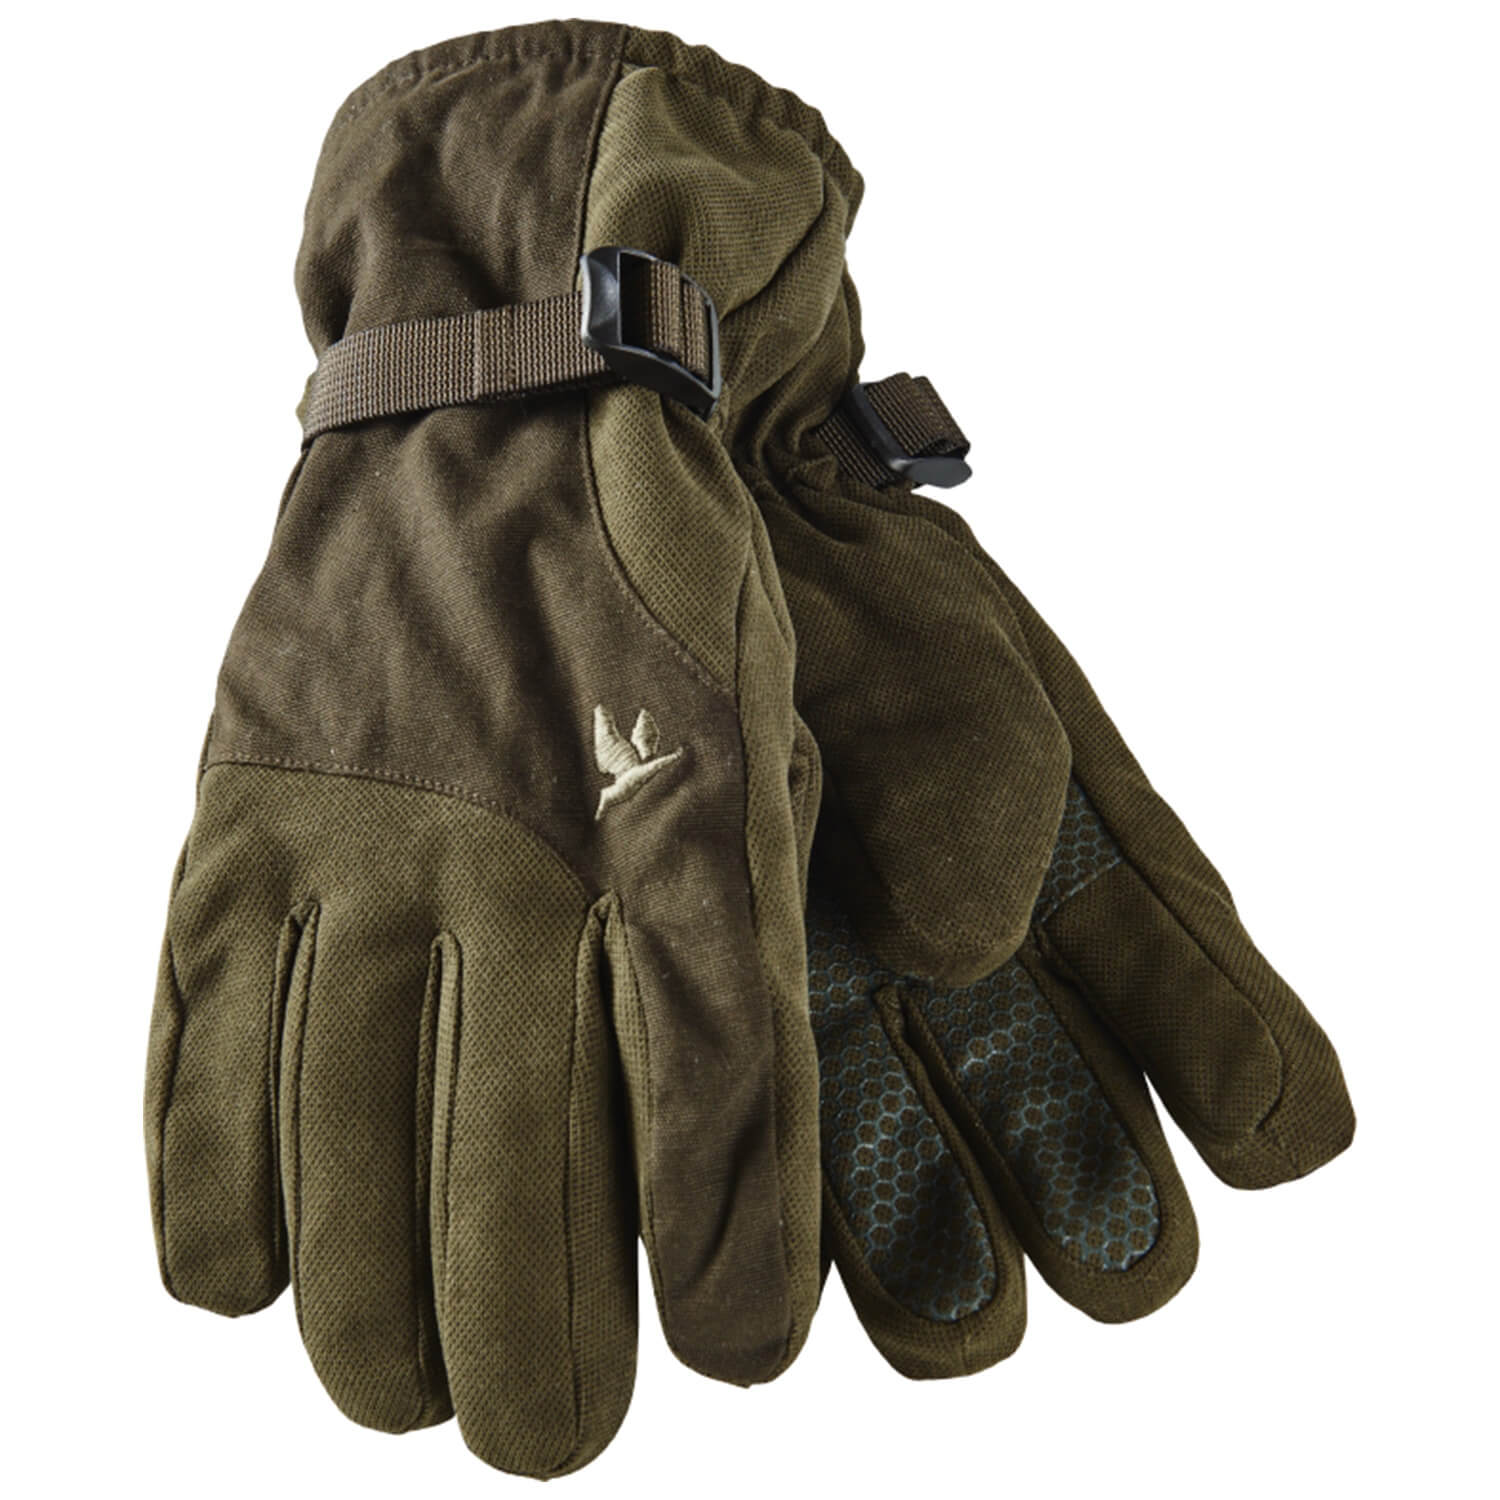 Seeland Jagdhandschuhe Helt (Grizzly Brown) - Handschuhe